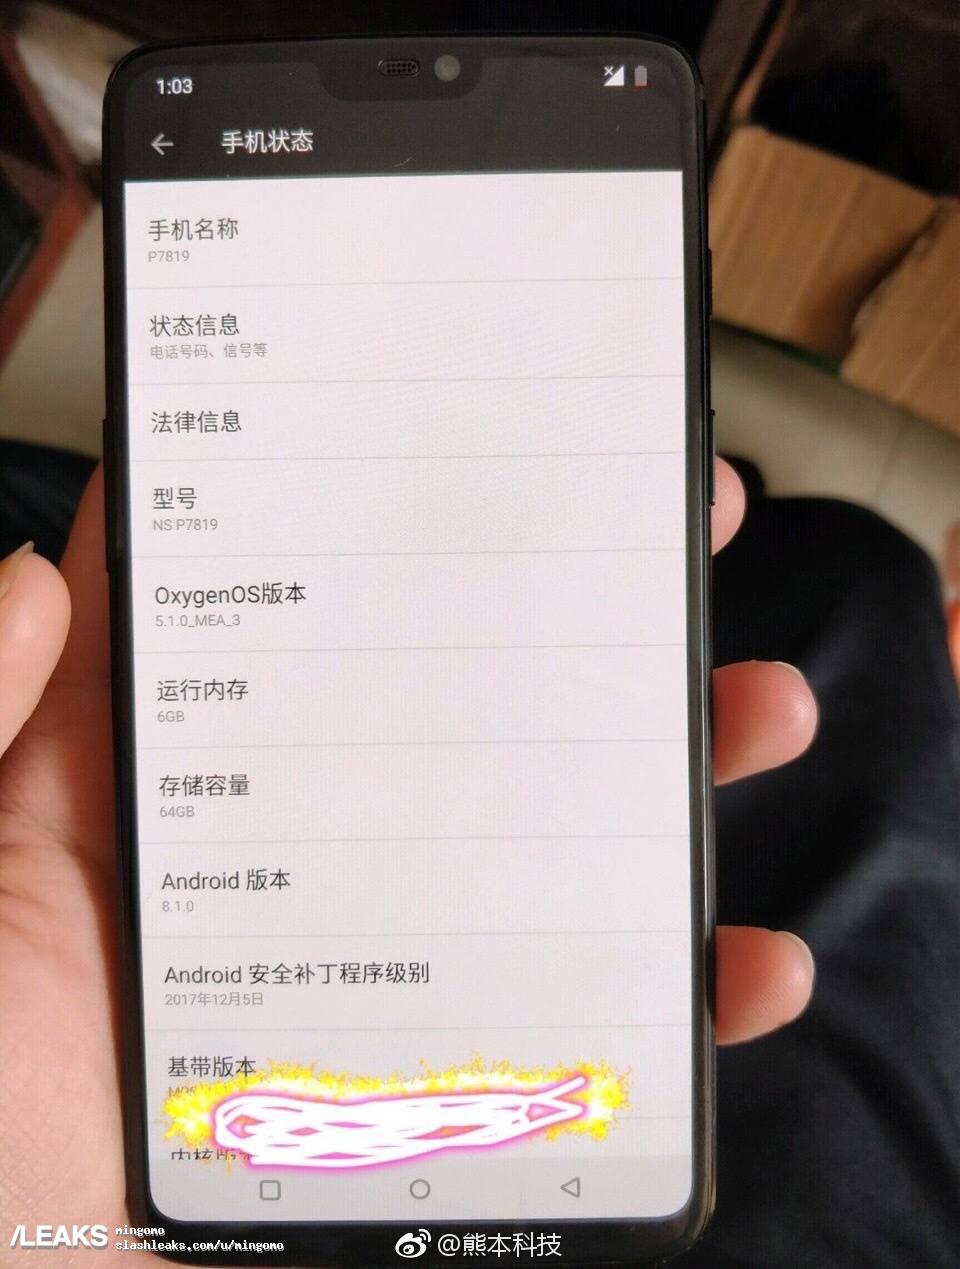 OnePlus 6 images copied iPhone X